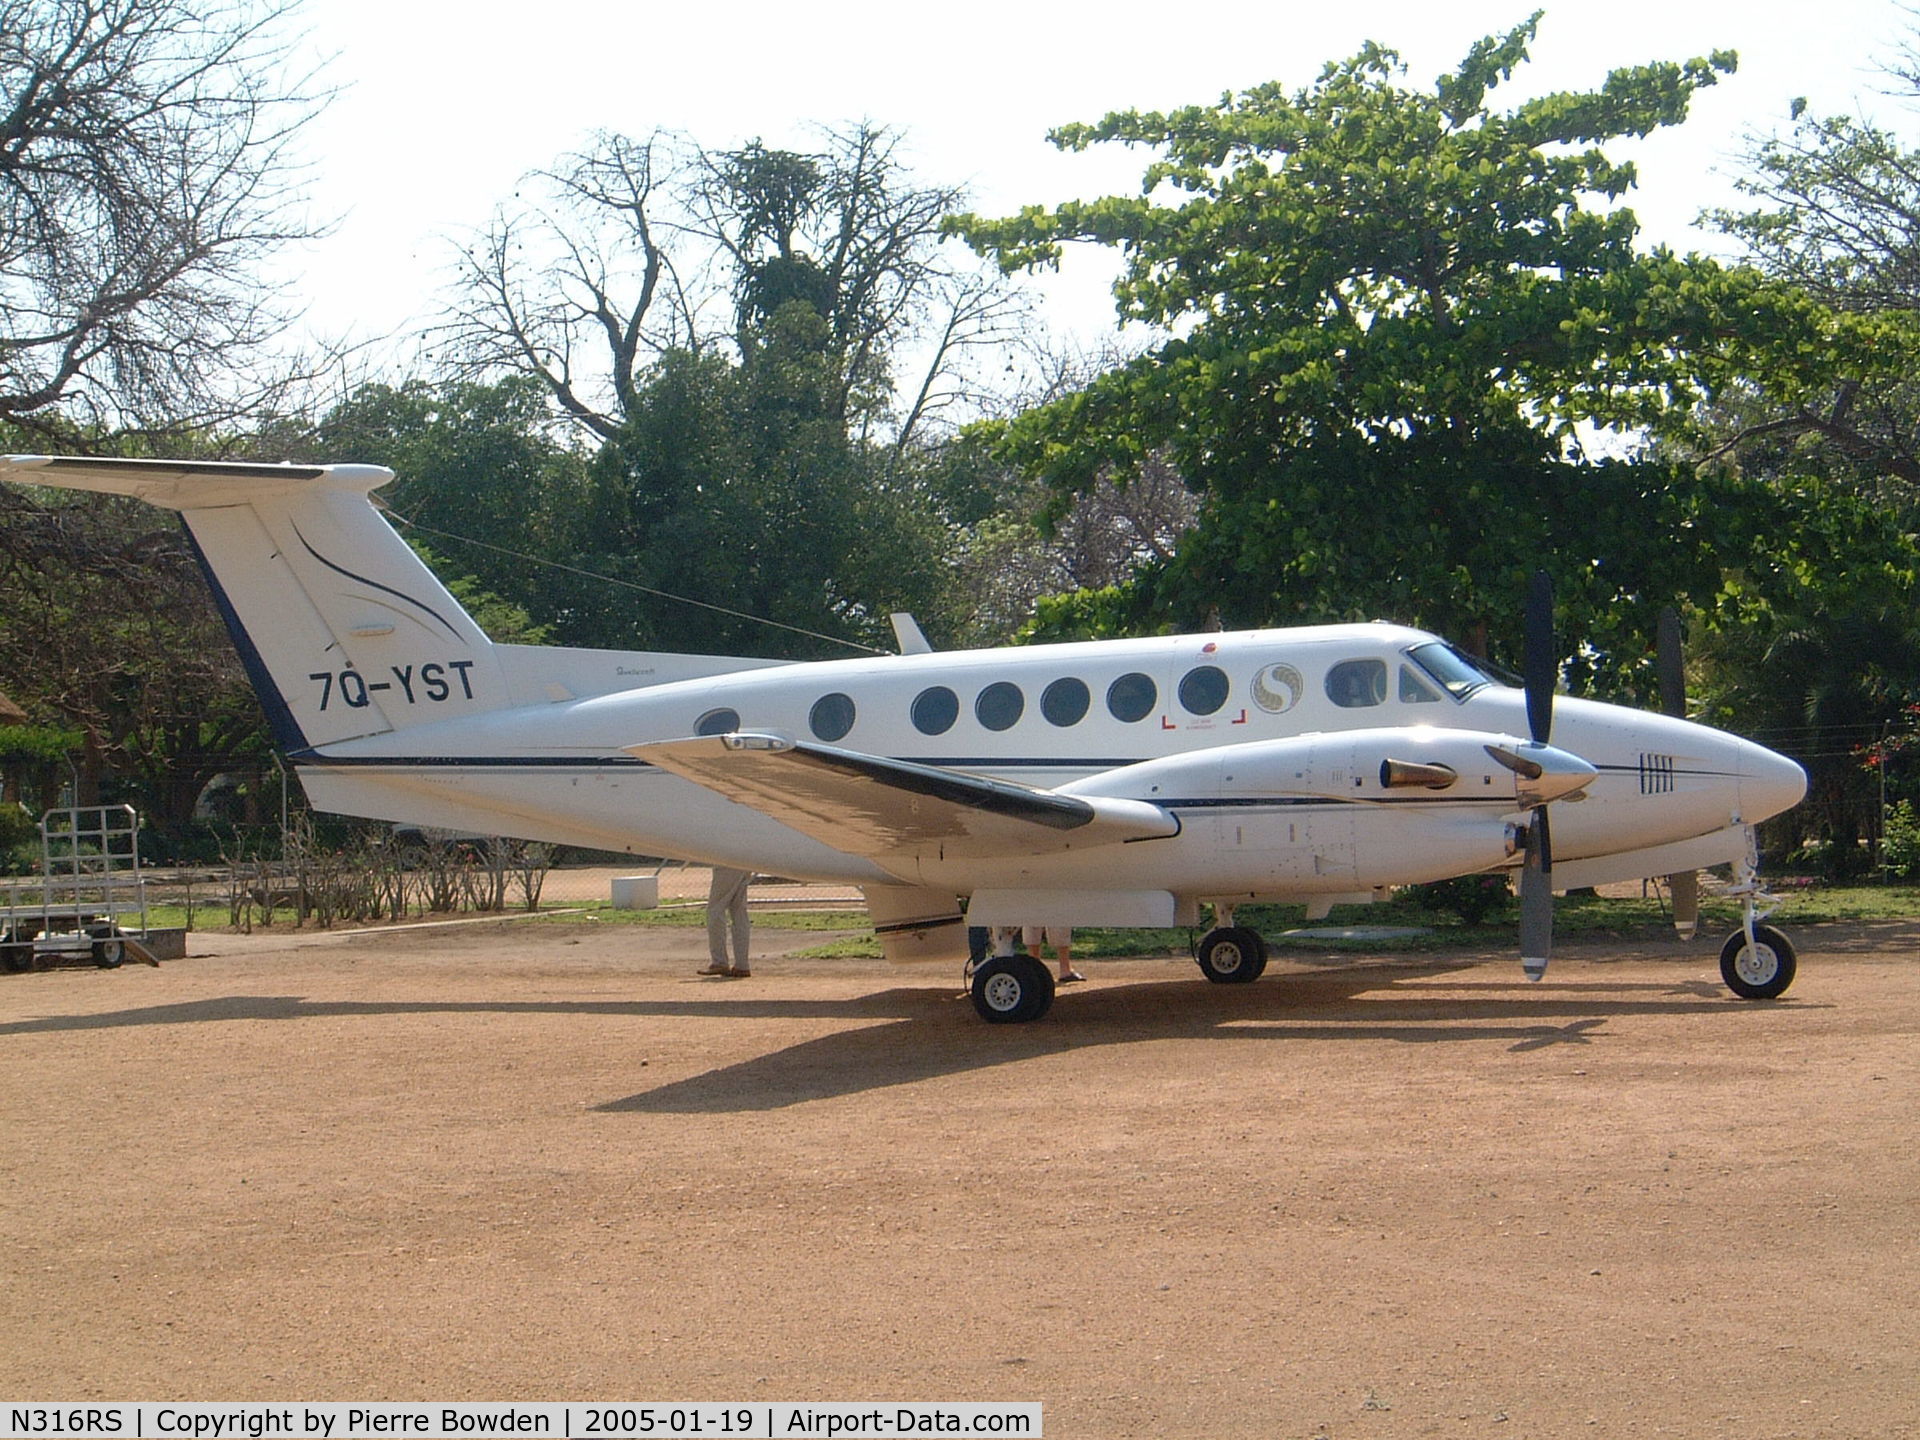 N316RS, 1987 Beech 300 C/N FA-139, N316RS / 7Q-YST when it was still based in Malawi, Africa